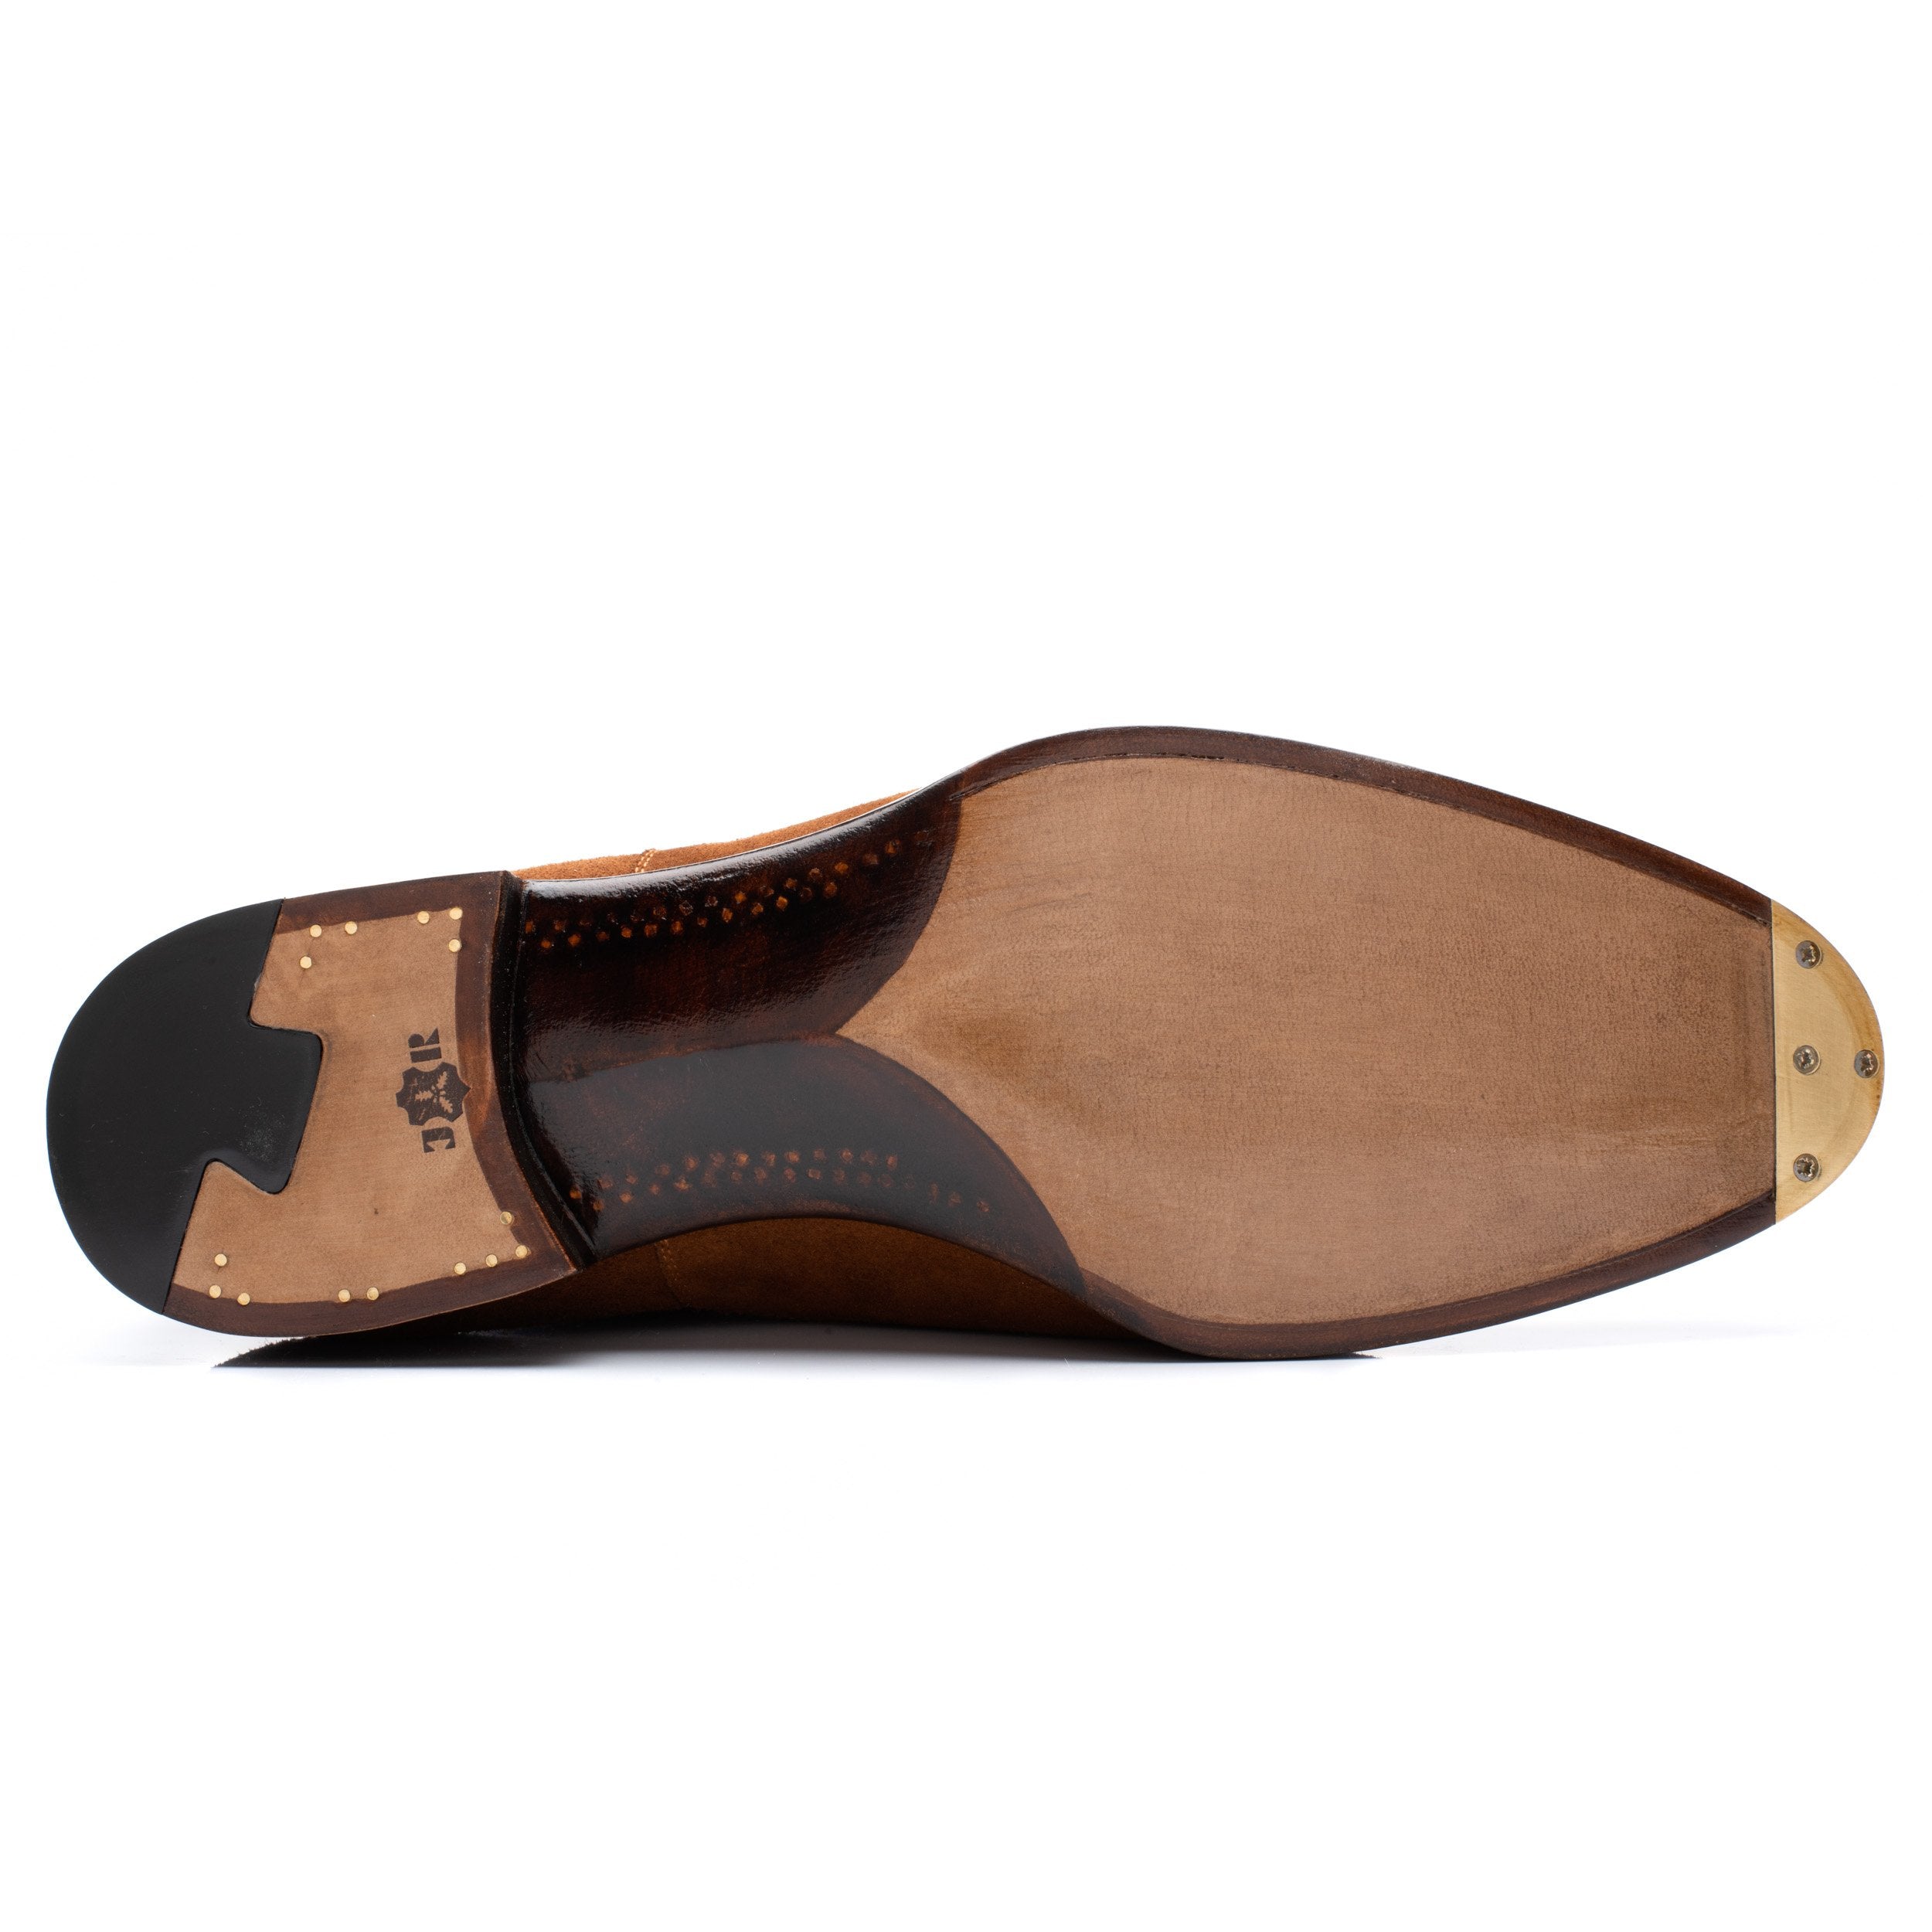 PASSUS SHOES Handmade "Winston" Wet Sand Suede Cap Toe Oxford Shoes